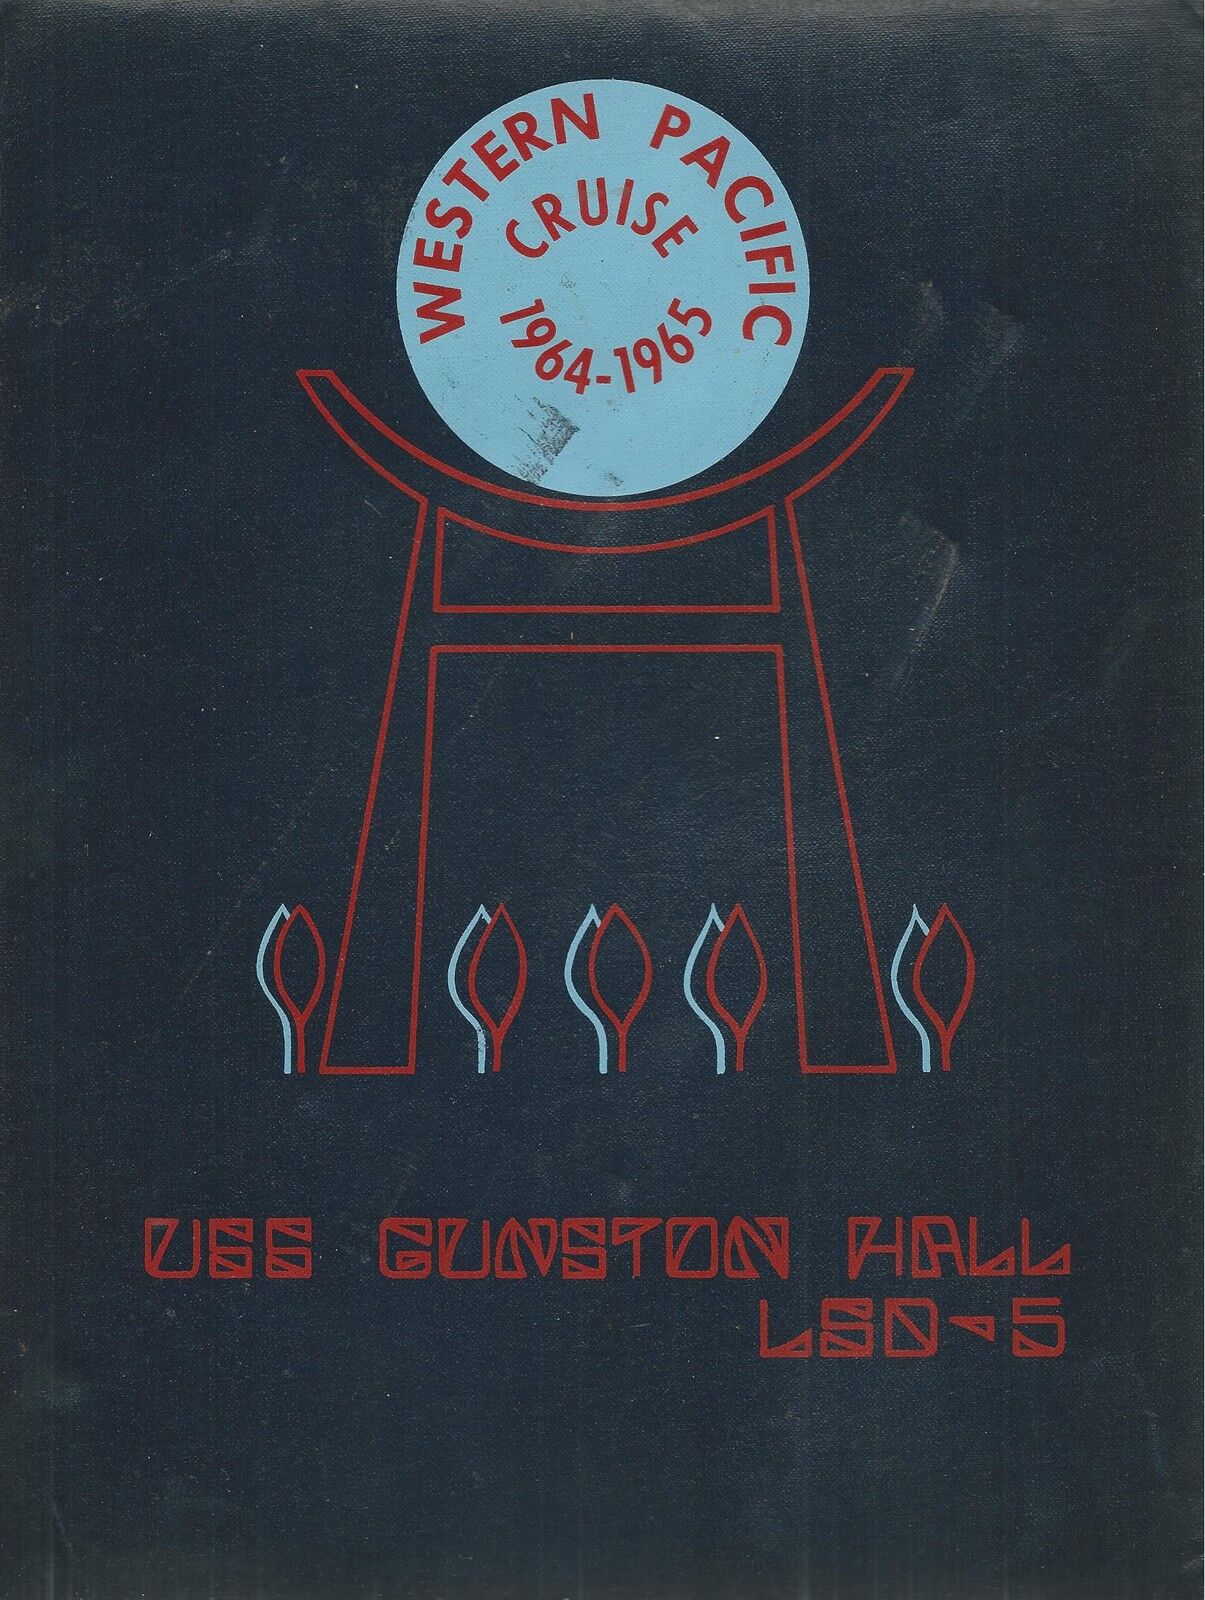 USS GUNSTON HALL LSD-5 WESTERN PACIFIC DEPLOYMENT CRUISE BOOK YEAR LOG 1964-65